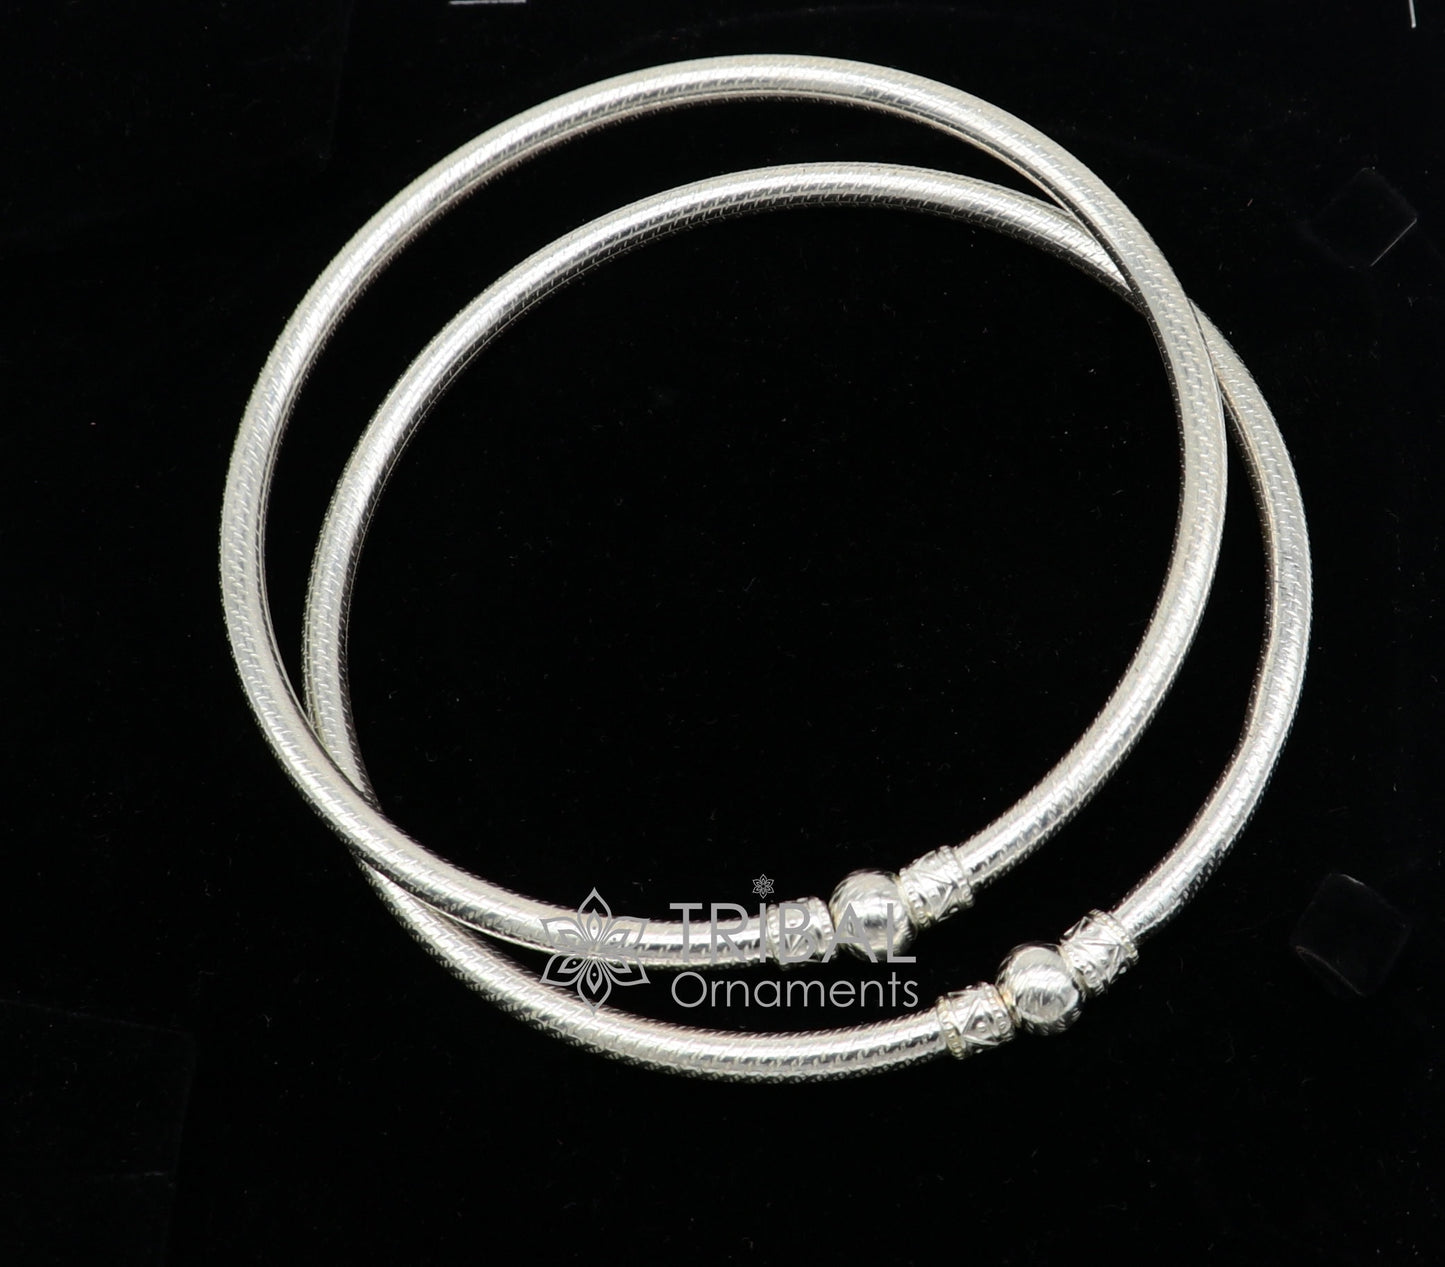 Handmade design sterling silver ankle kada bracelet, amazing single ball design ethnic ankle jewelry best nsfk96 - TRIBAL ORNAMENTS